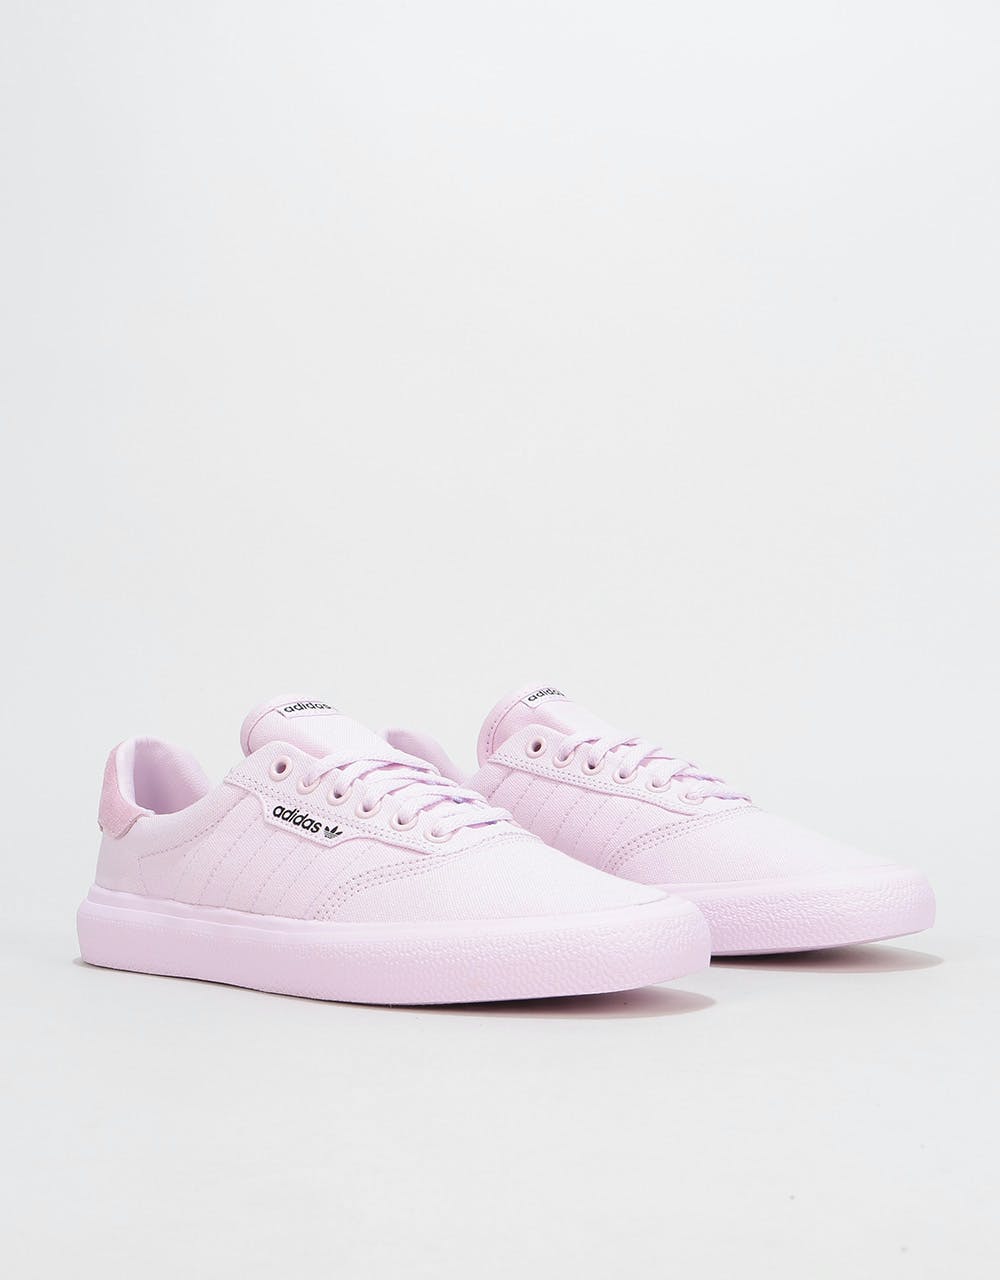 adidas 3MC Skate Shoes - Aero Pink/Aero Pink/Core Black – Route One